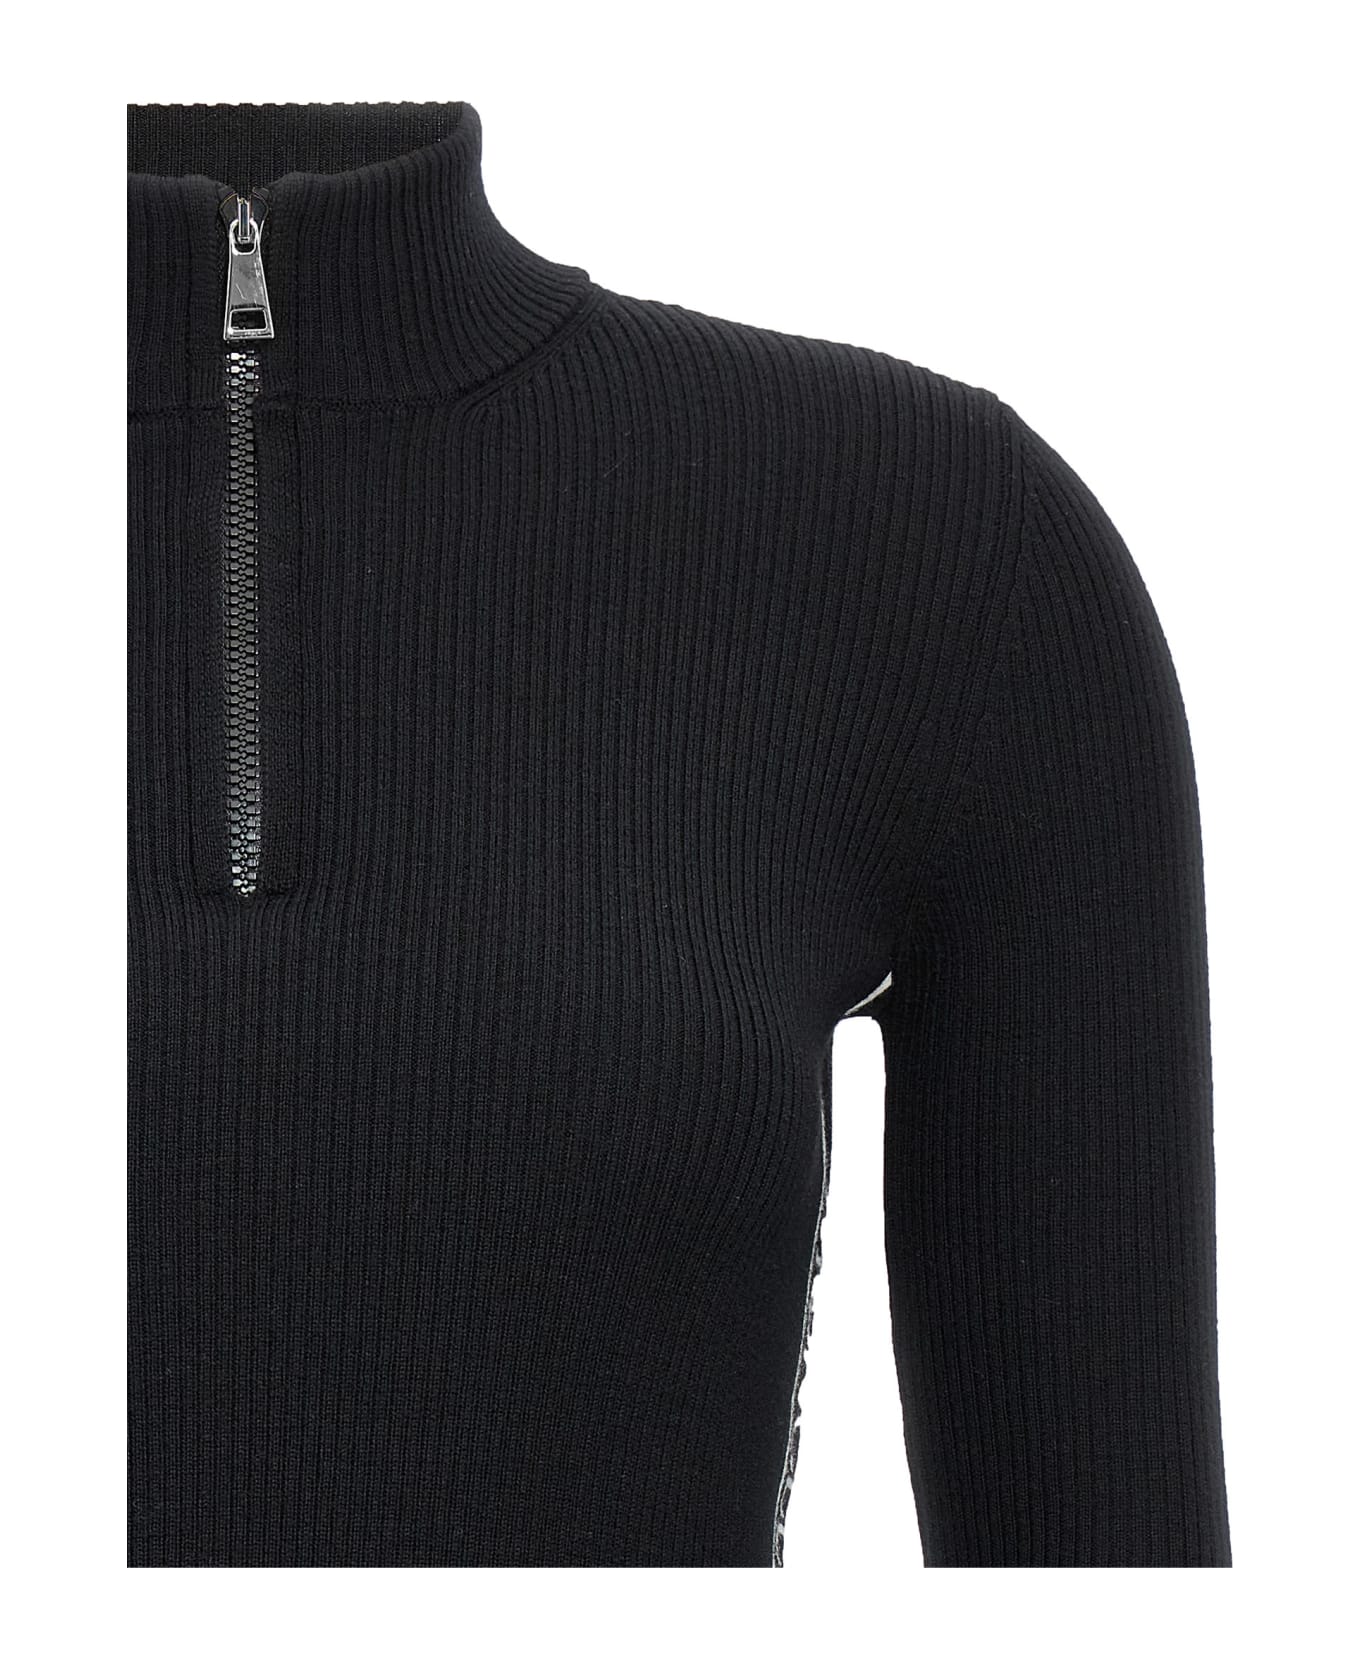 Moncler Black Wool Turtleneck With Zip - Black